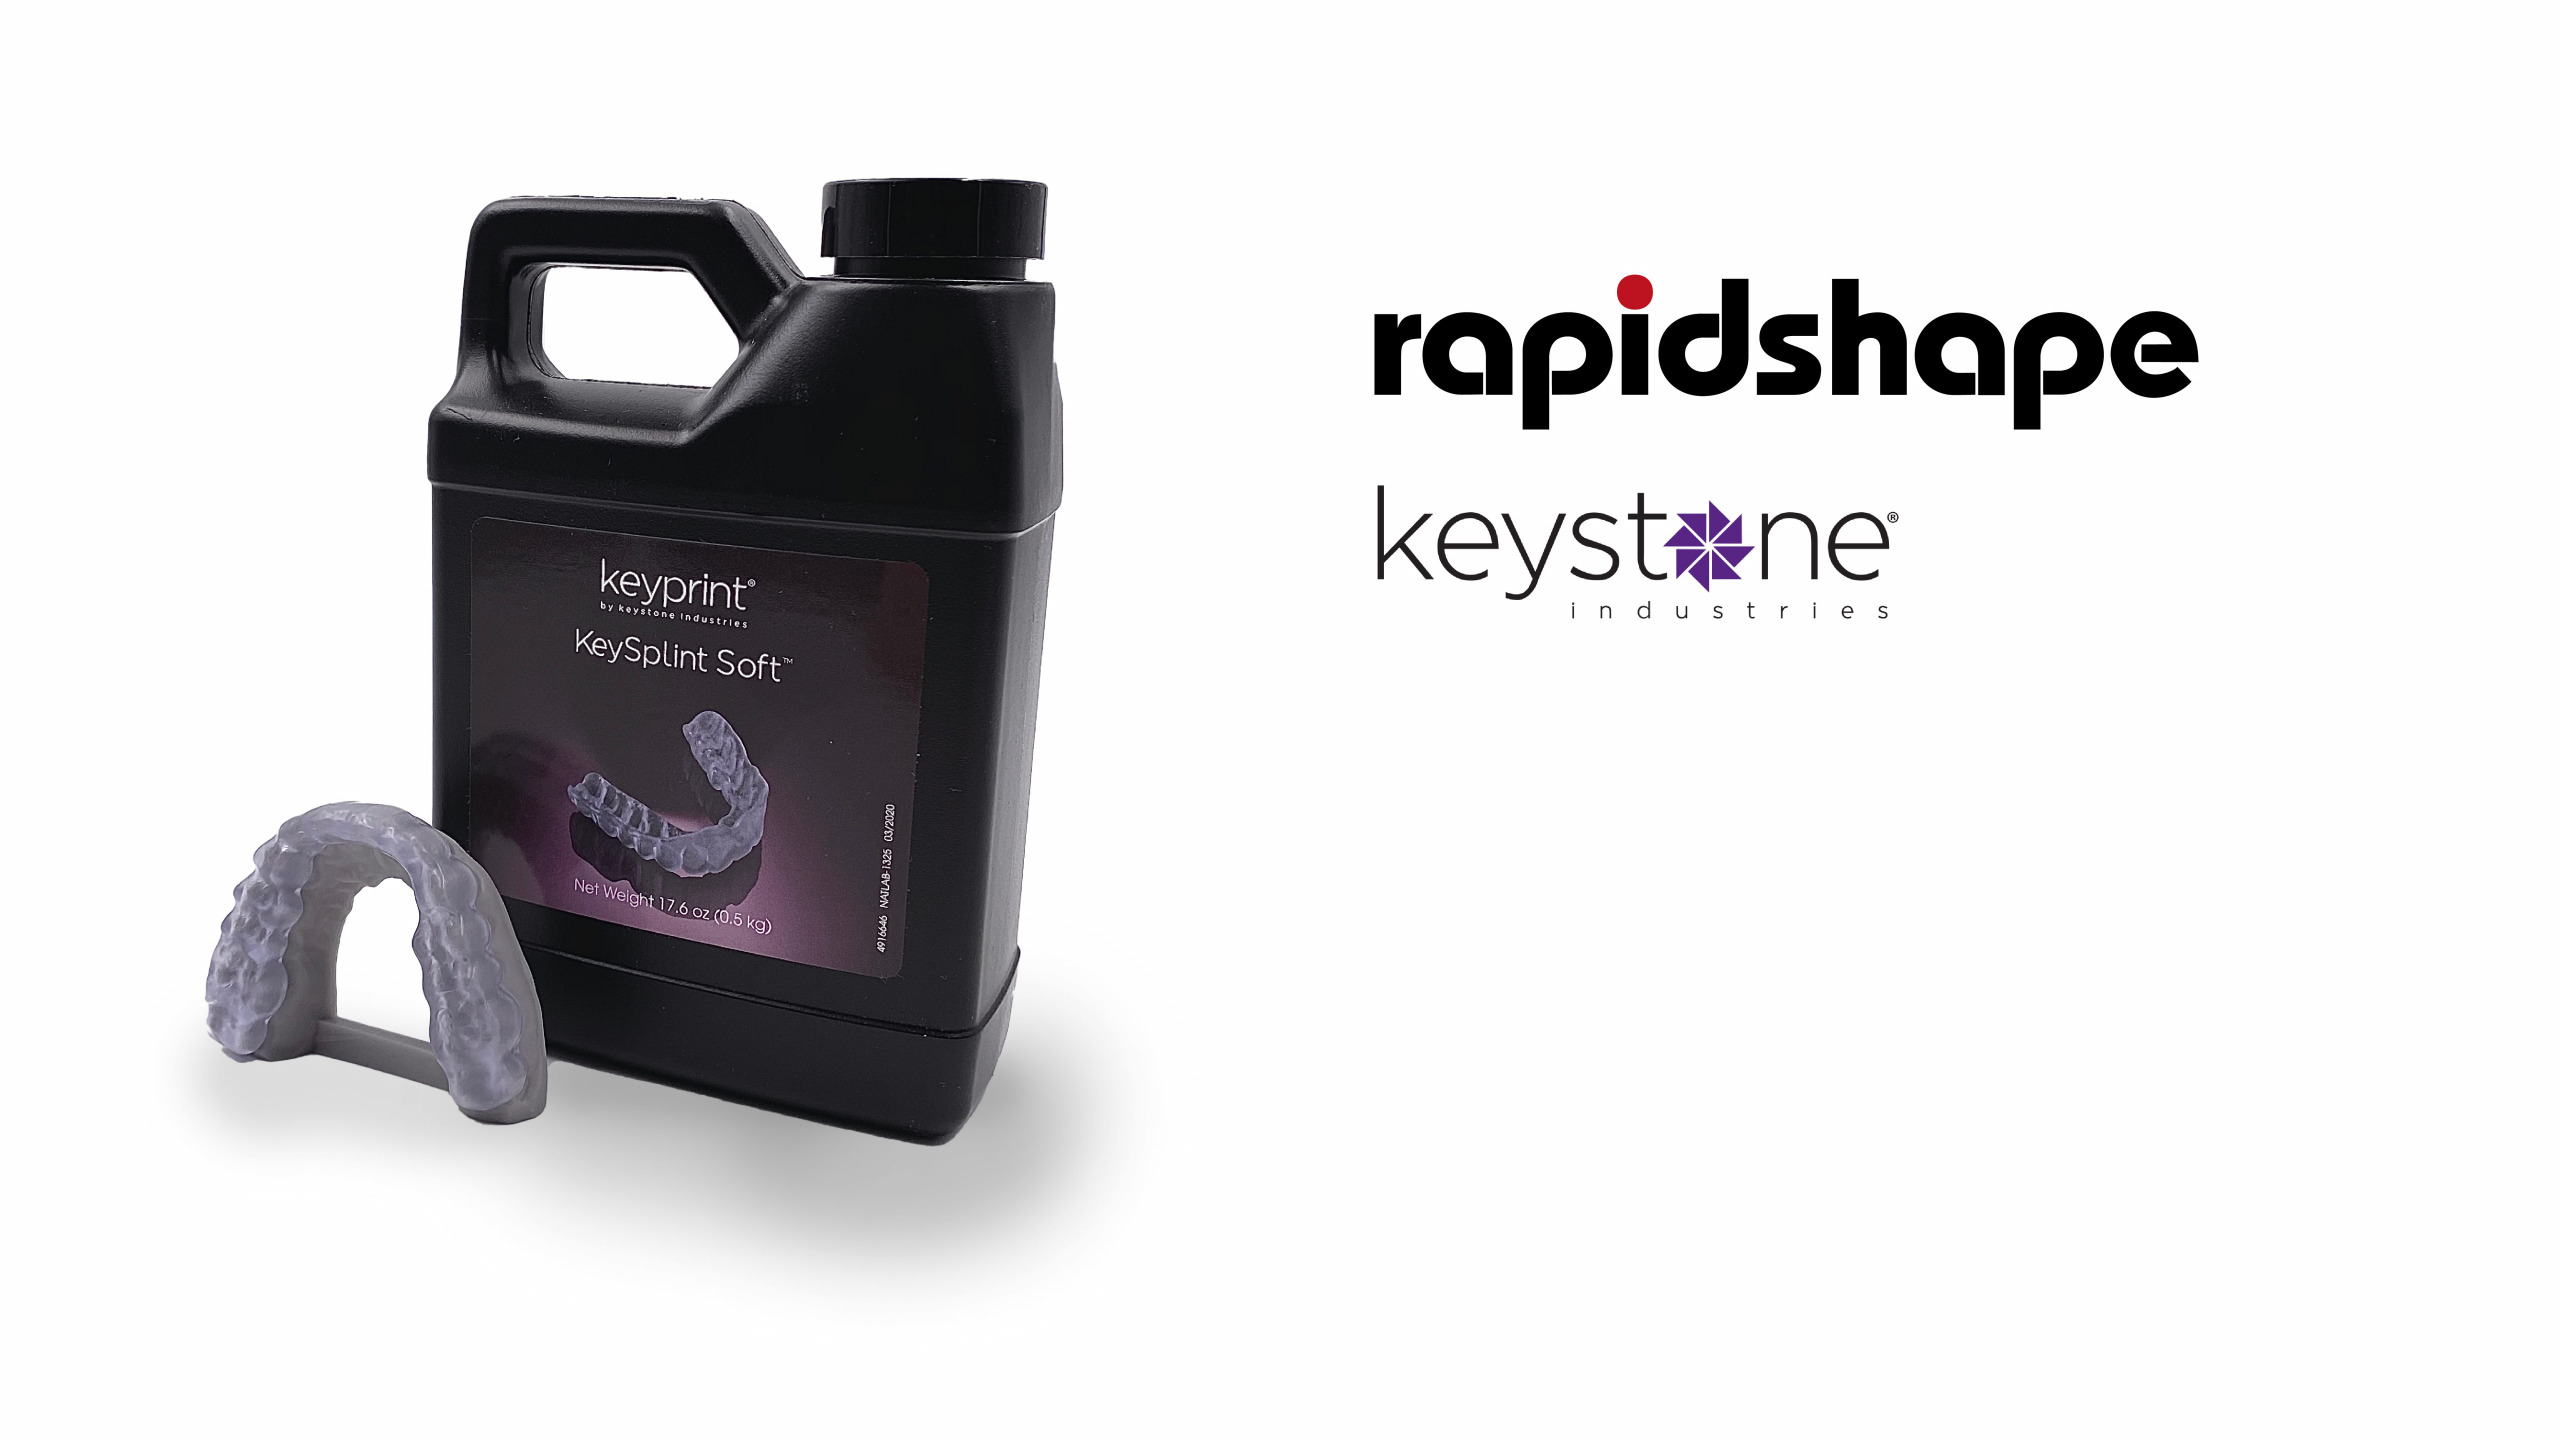 Rapid Shape® GmbH and Keystone Industries